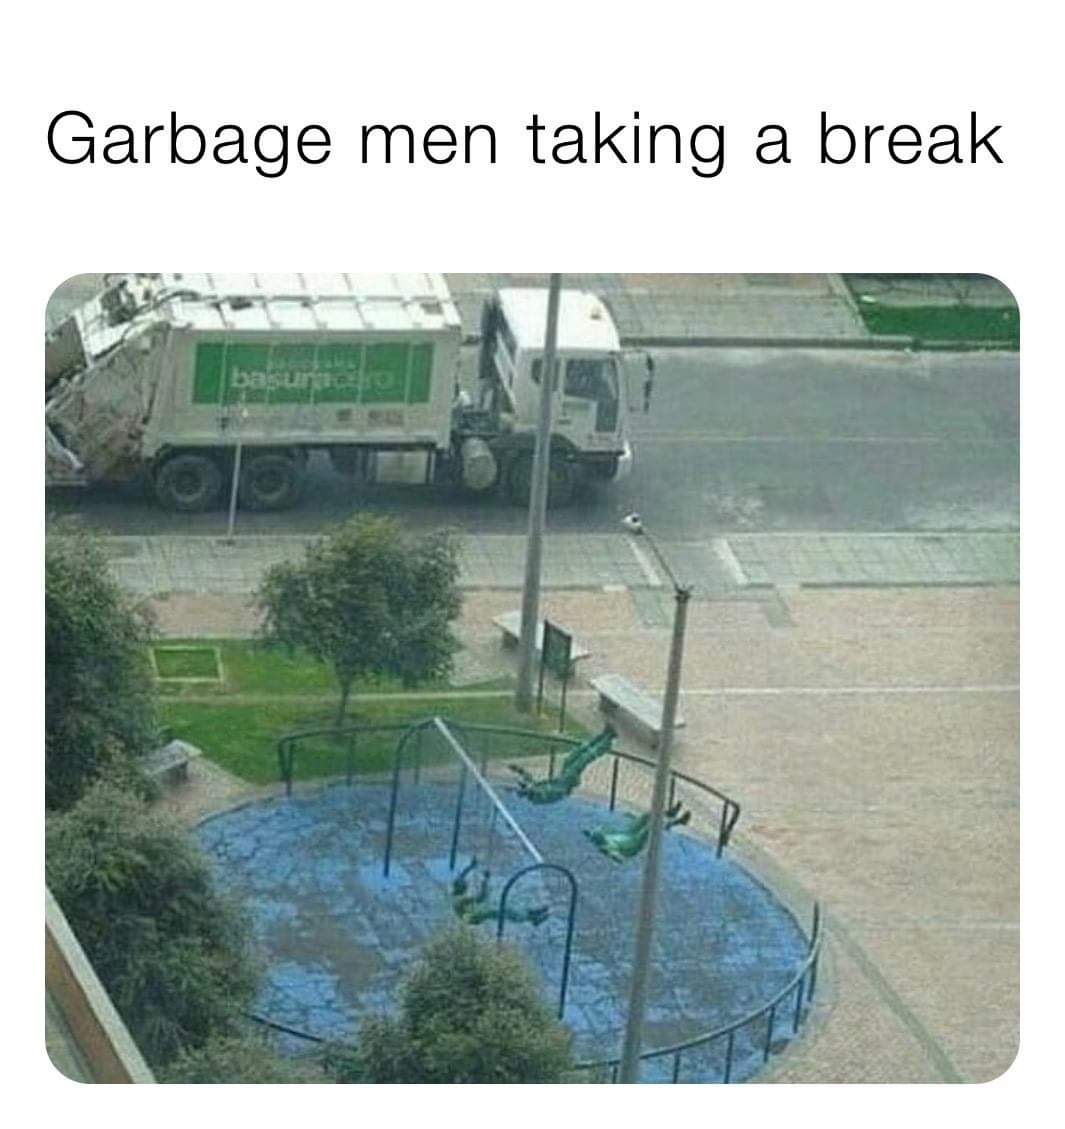 Garbage men taking a break basunie